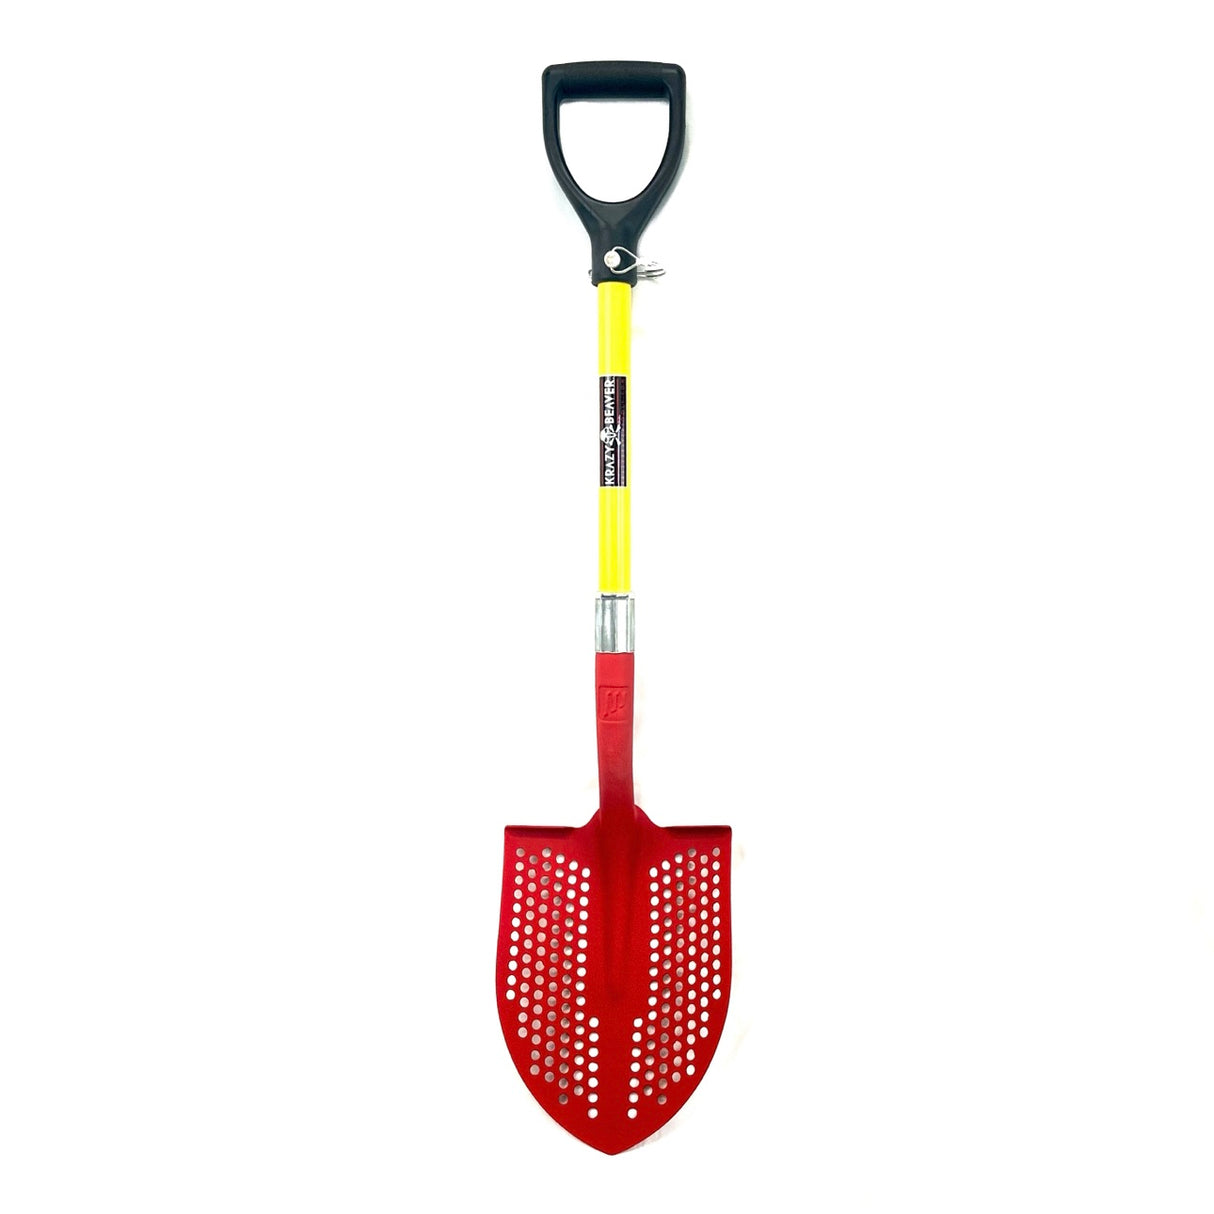 Krazy Beaver Mud Shovel (Red / Yellow)